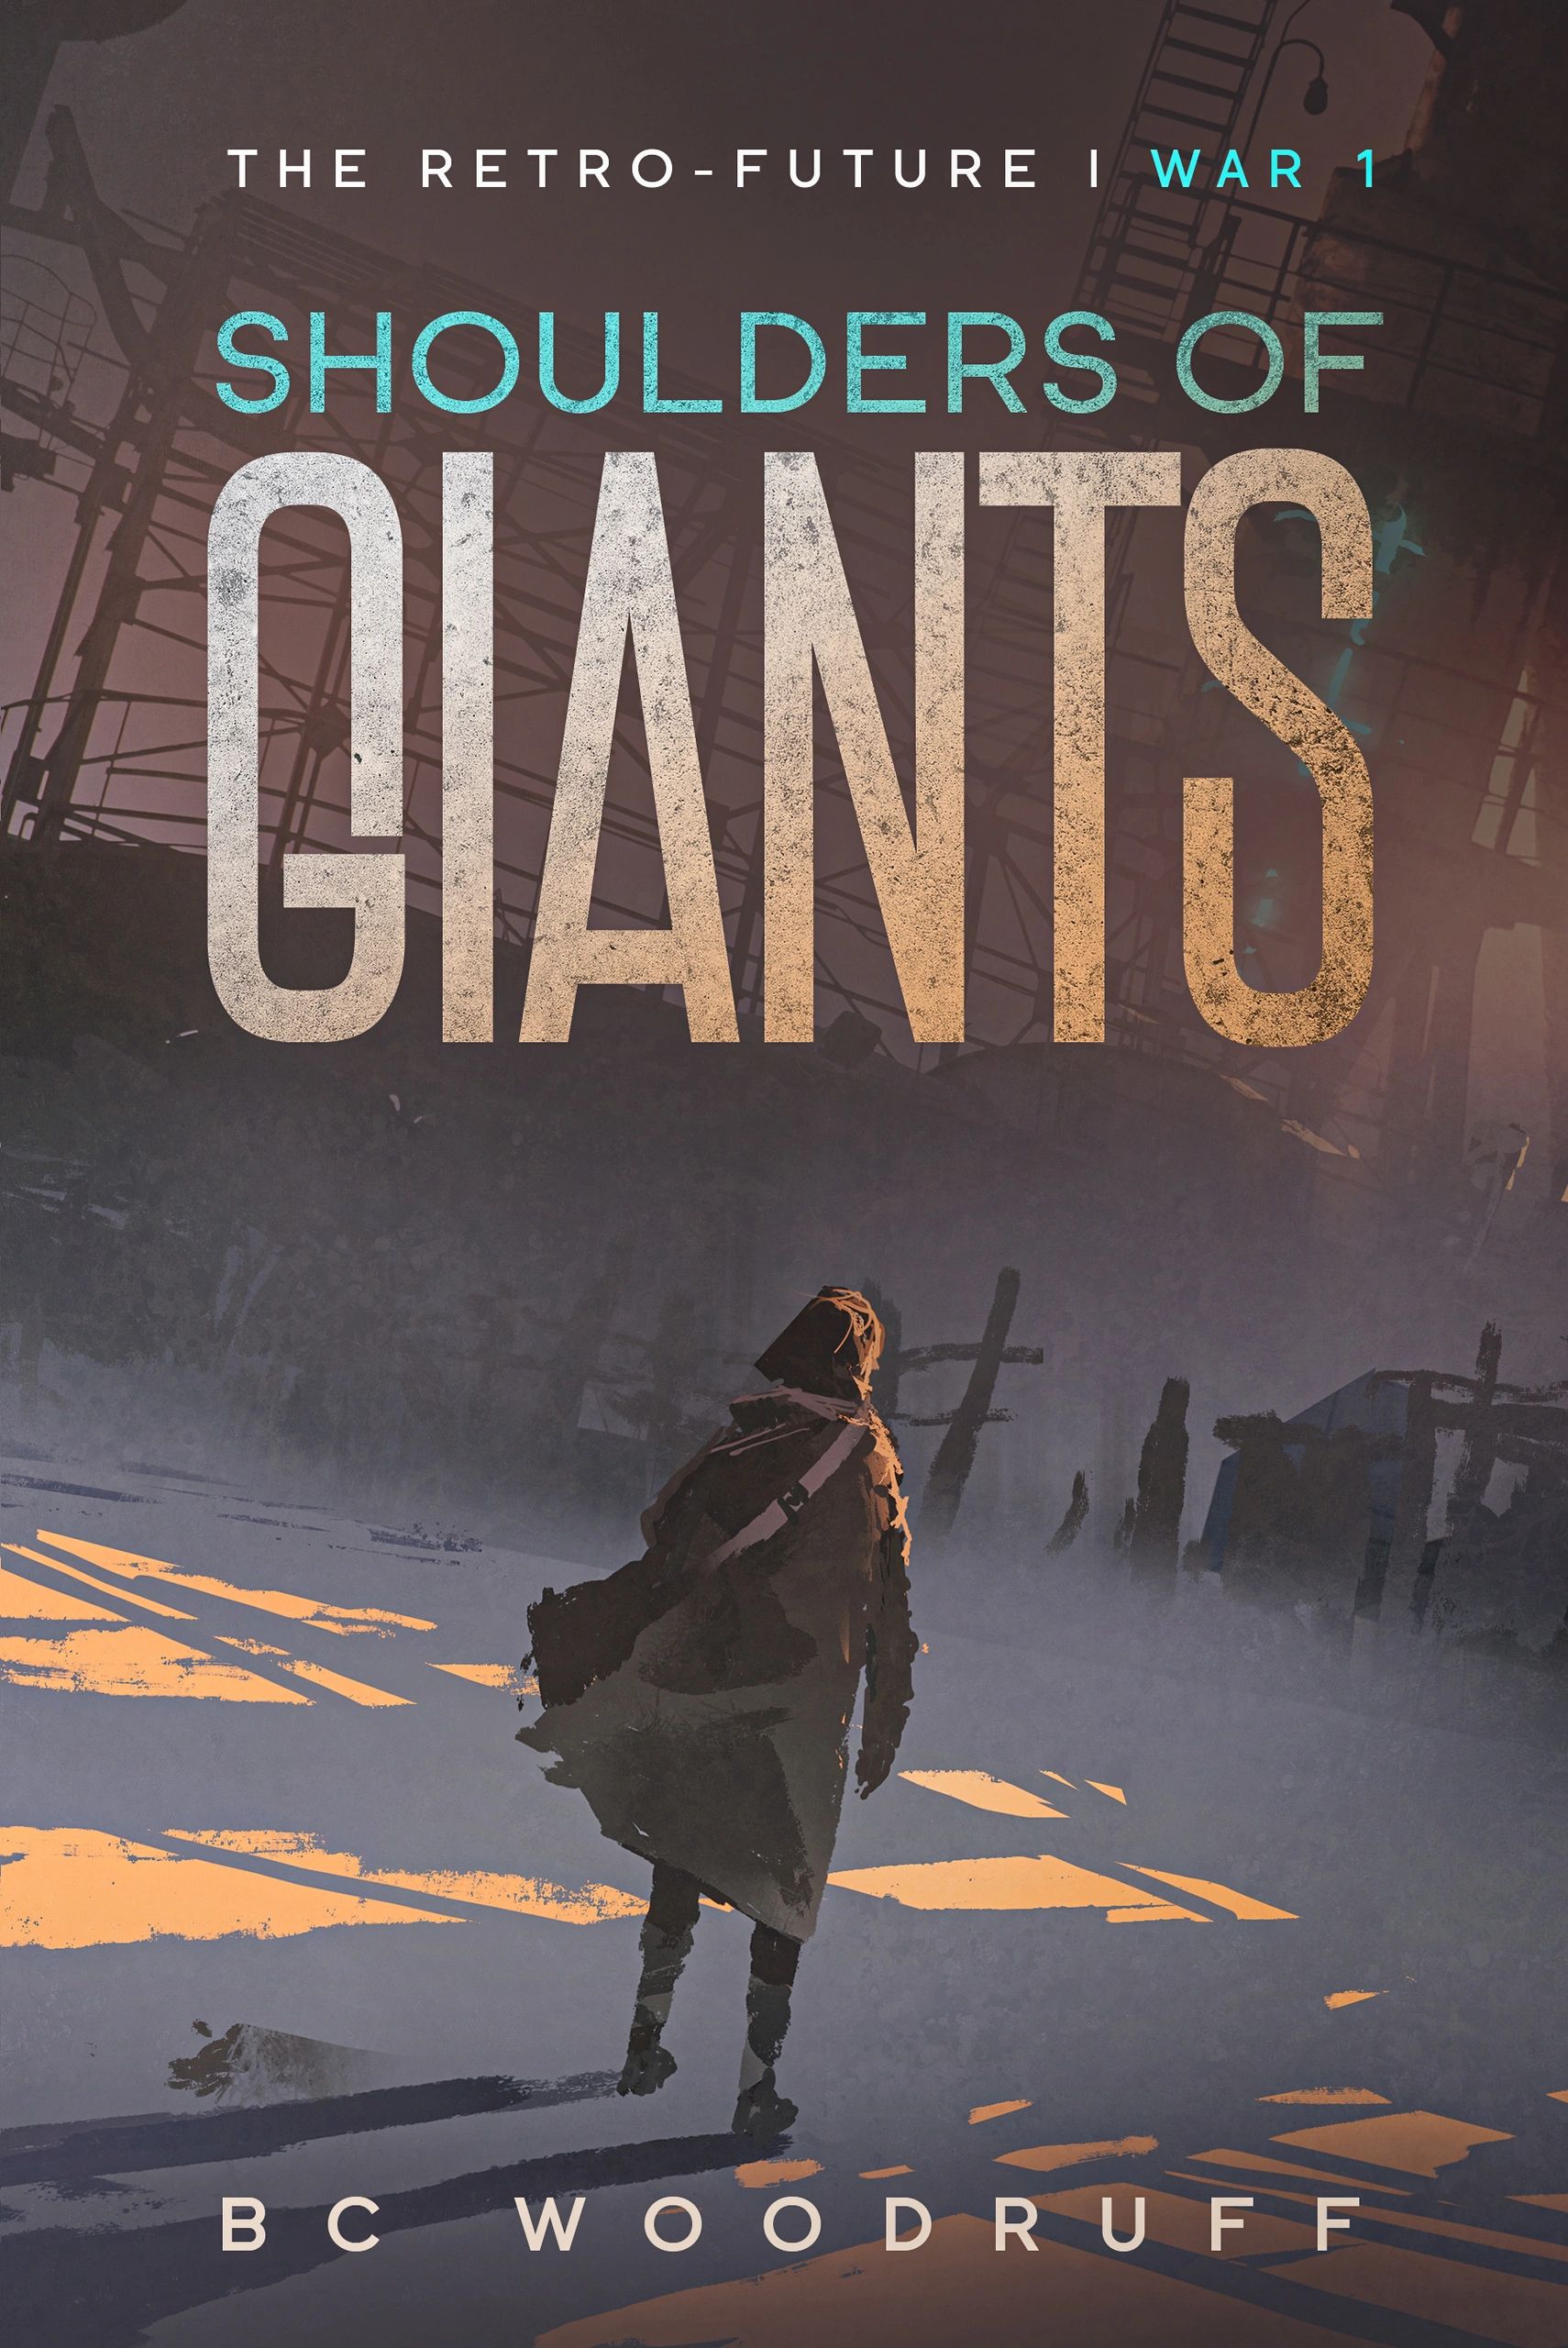 Shoulders of Giants download the new